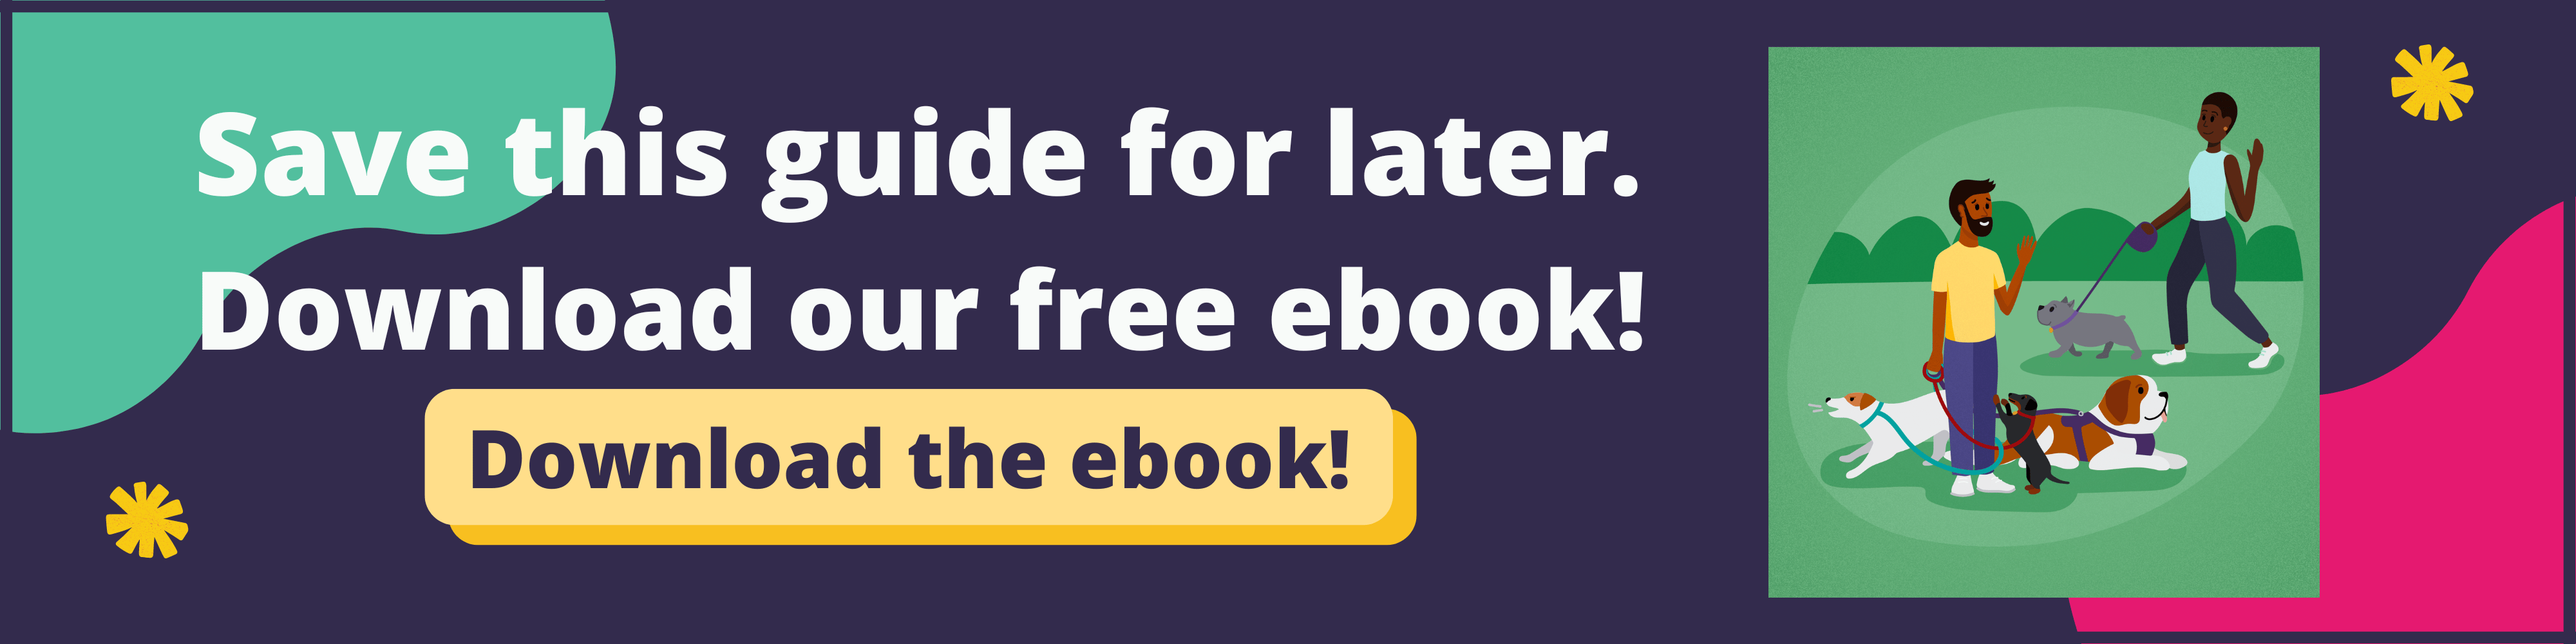 Ebook-CTA-hiring-guide-ending